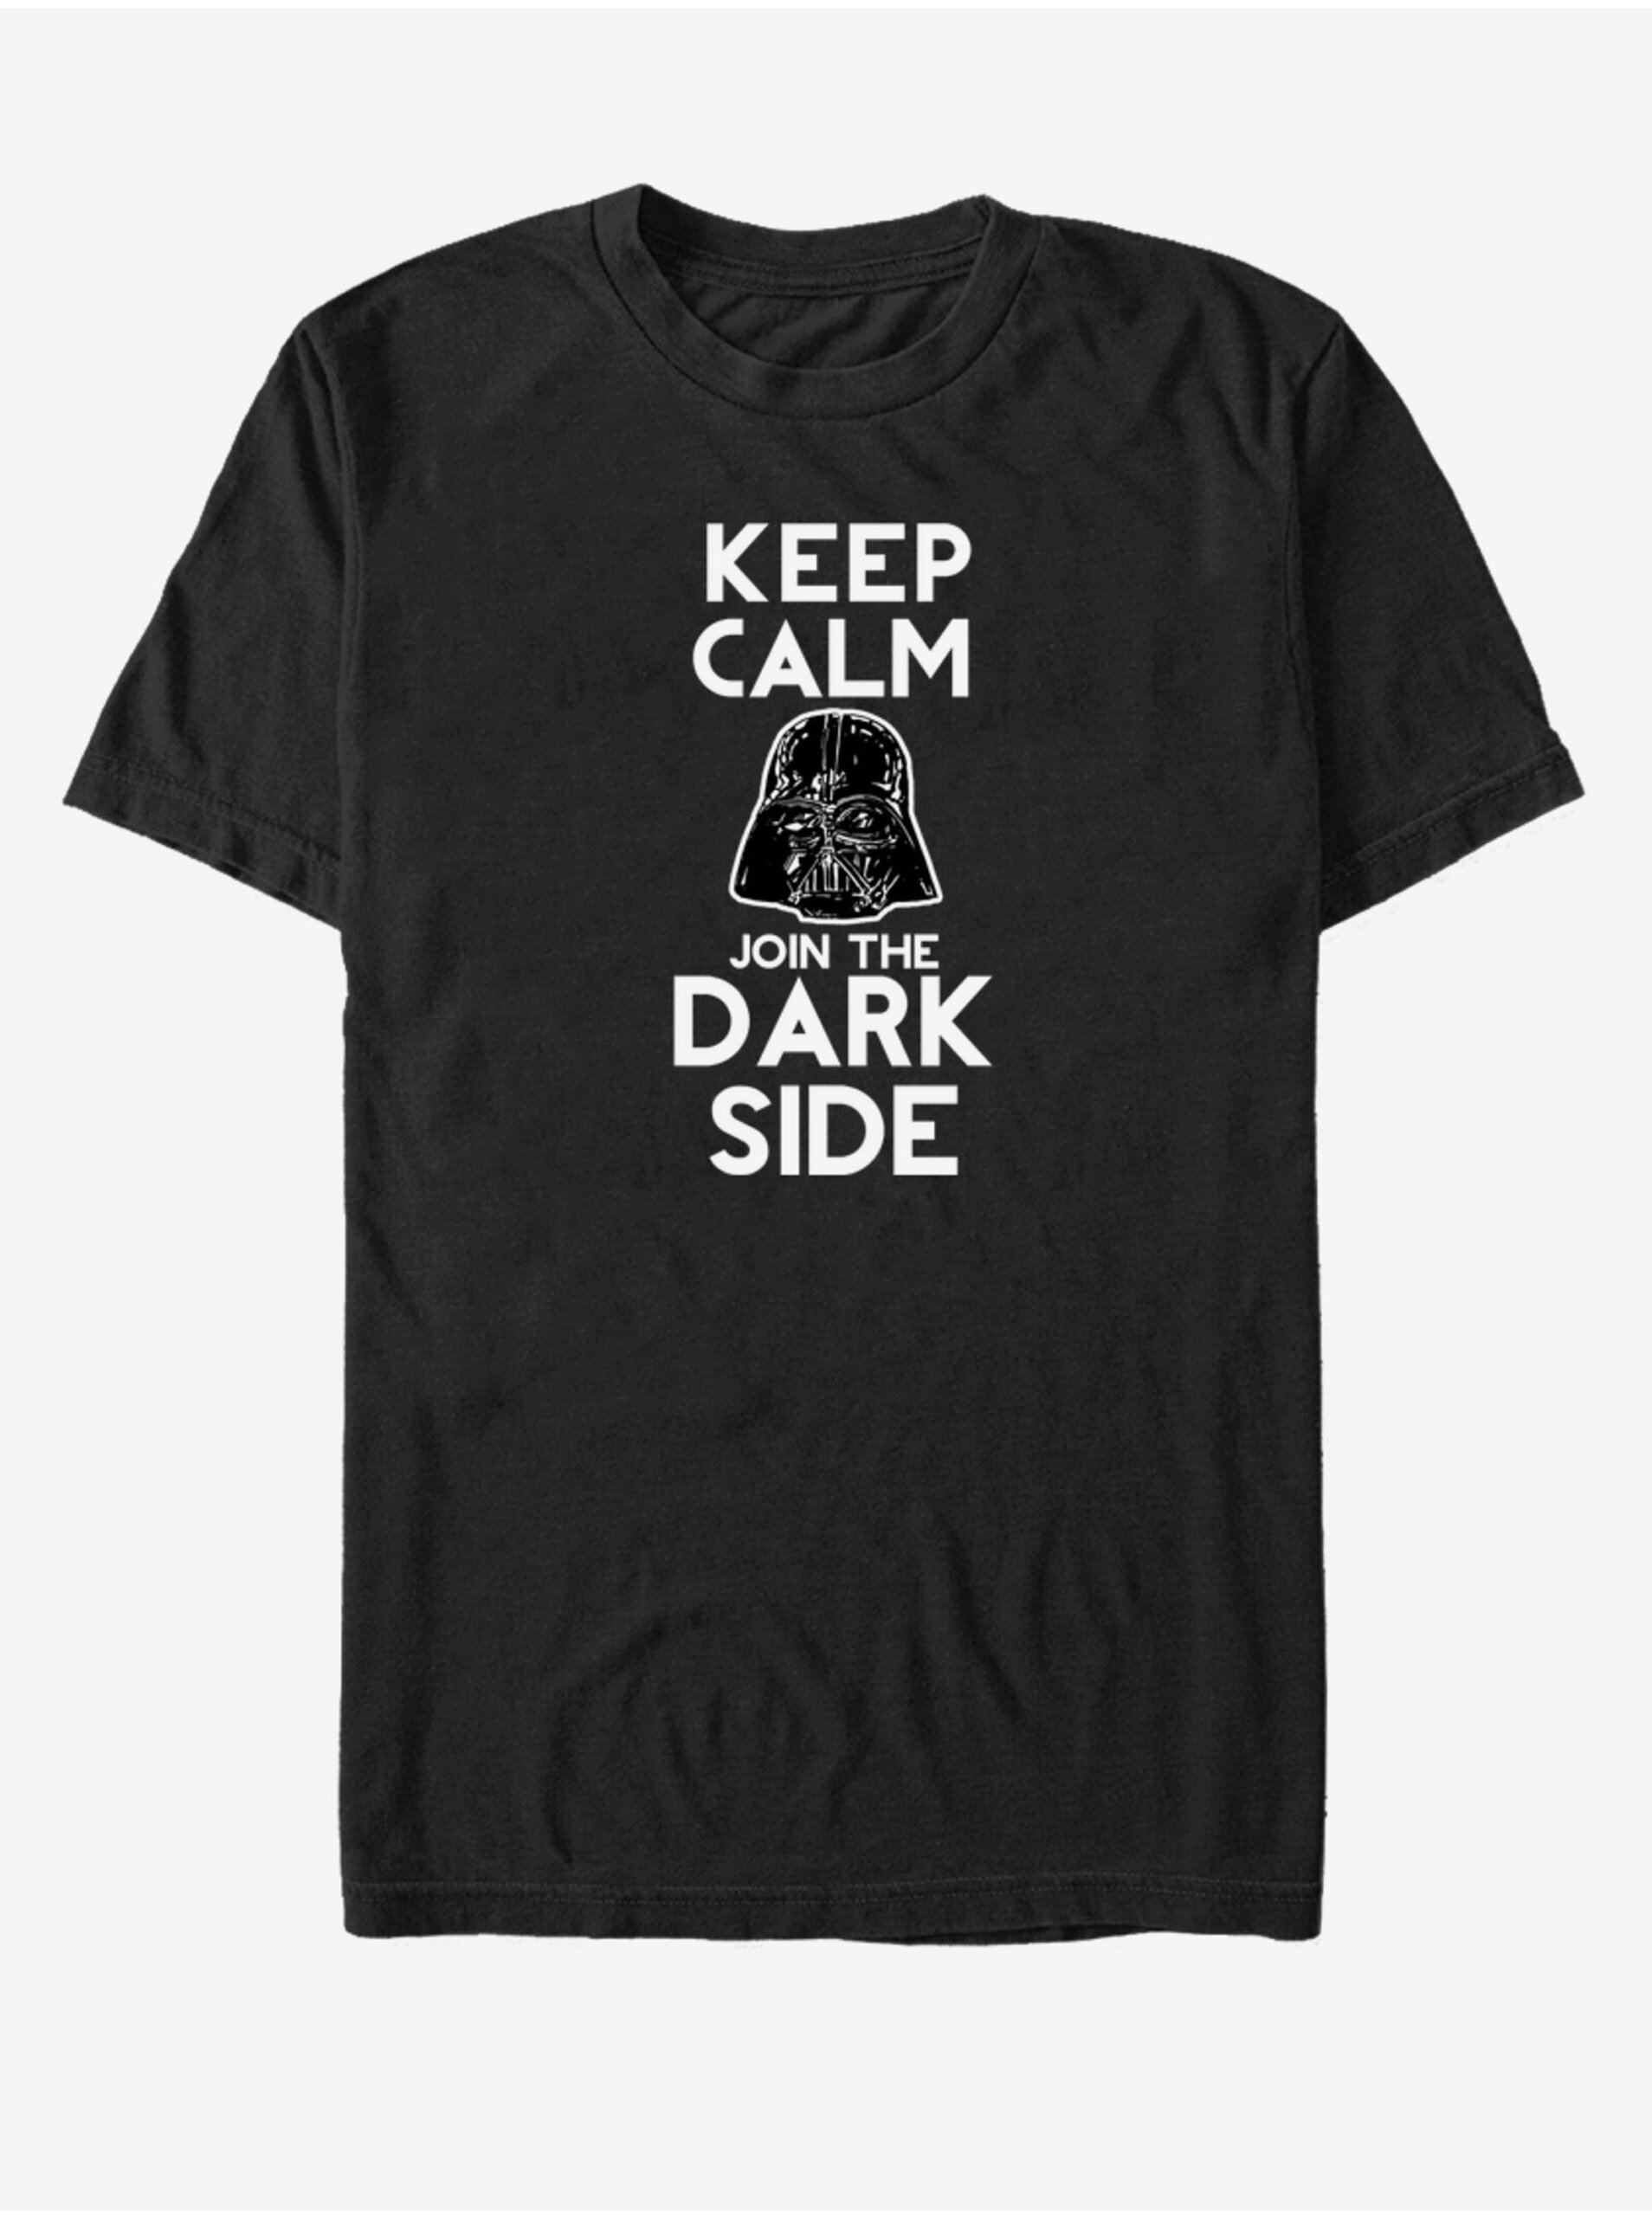 Lacno Černé unisex tričko Star Wars Join Dark